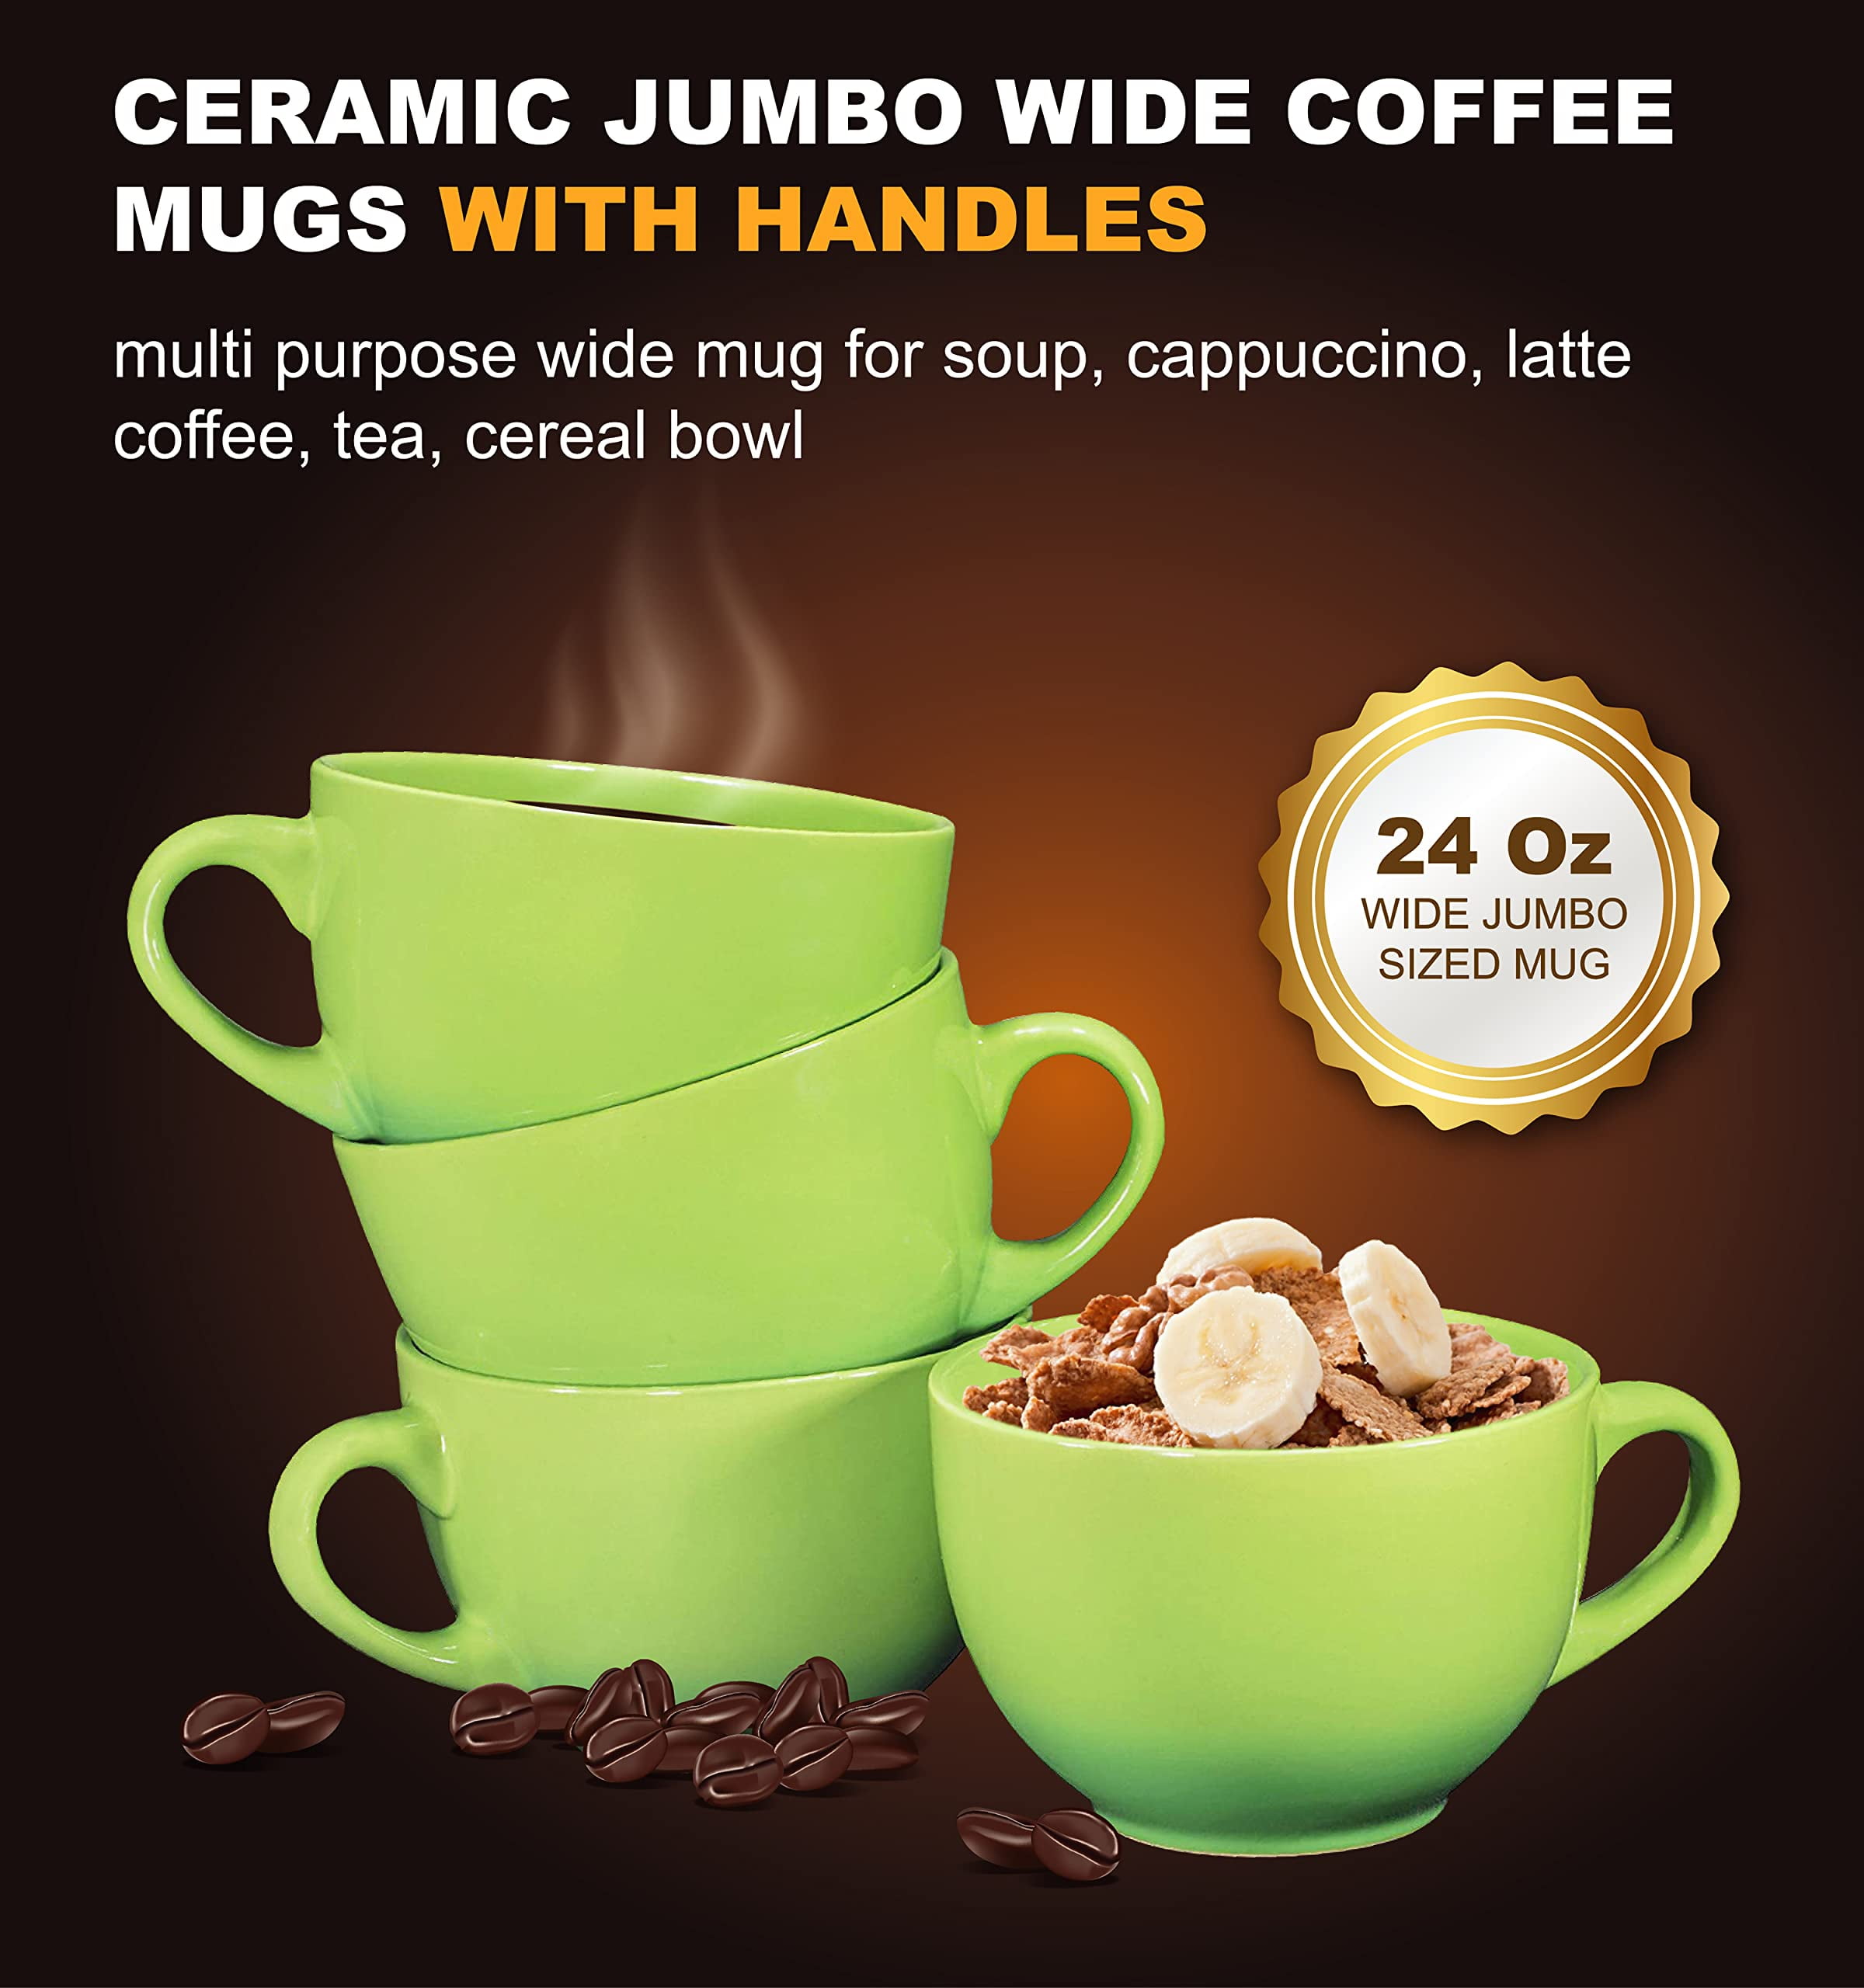 DOWAN Coffee Mugs Set of 4, 24 oz Large Coffee Mugs, Jumbo Soup Mugs With  Handles, Ceramic Coffee Cups for Coffee Cereal Latte for Men Women